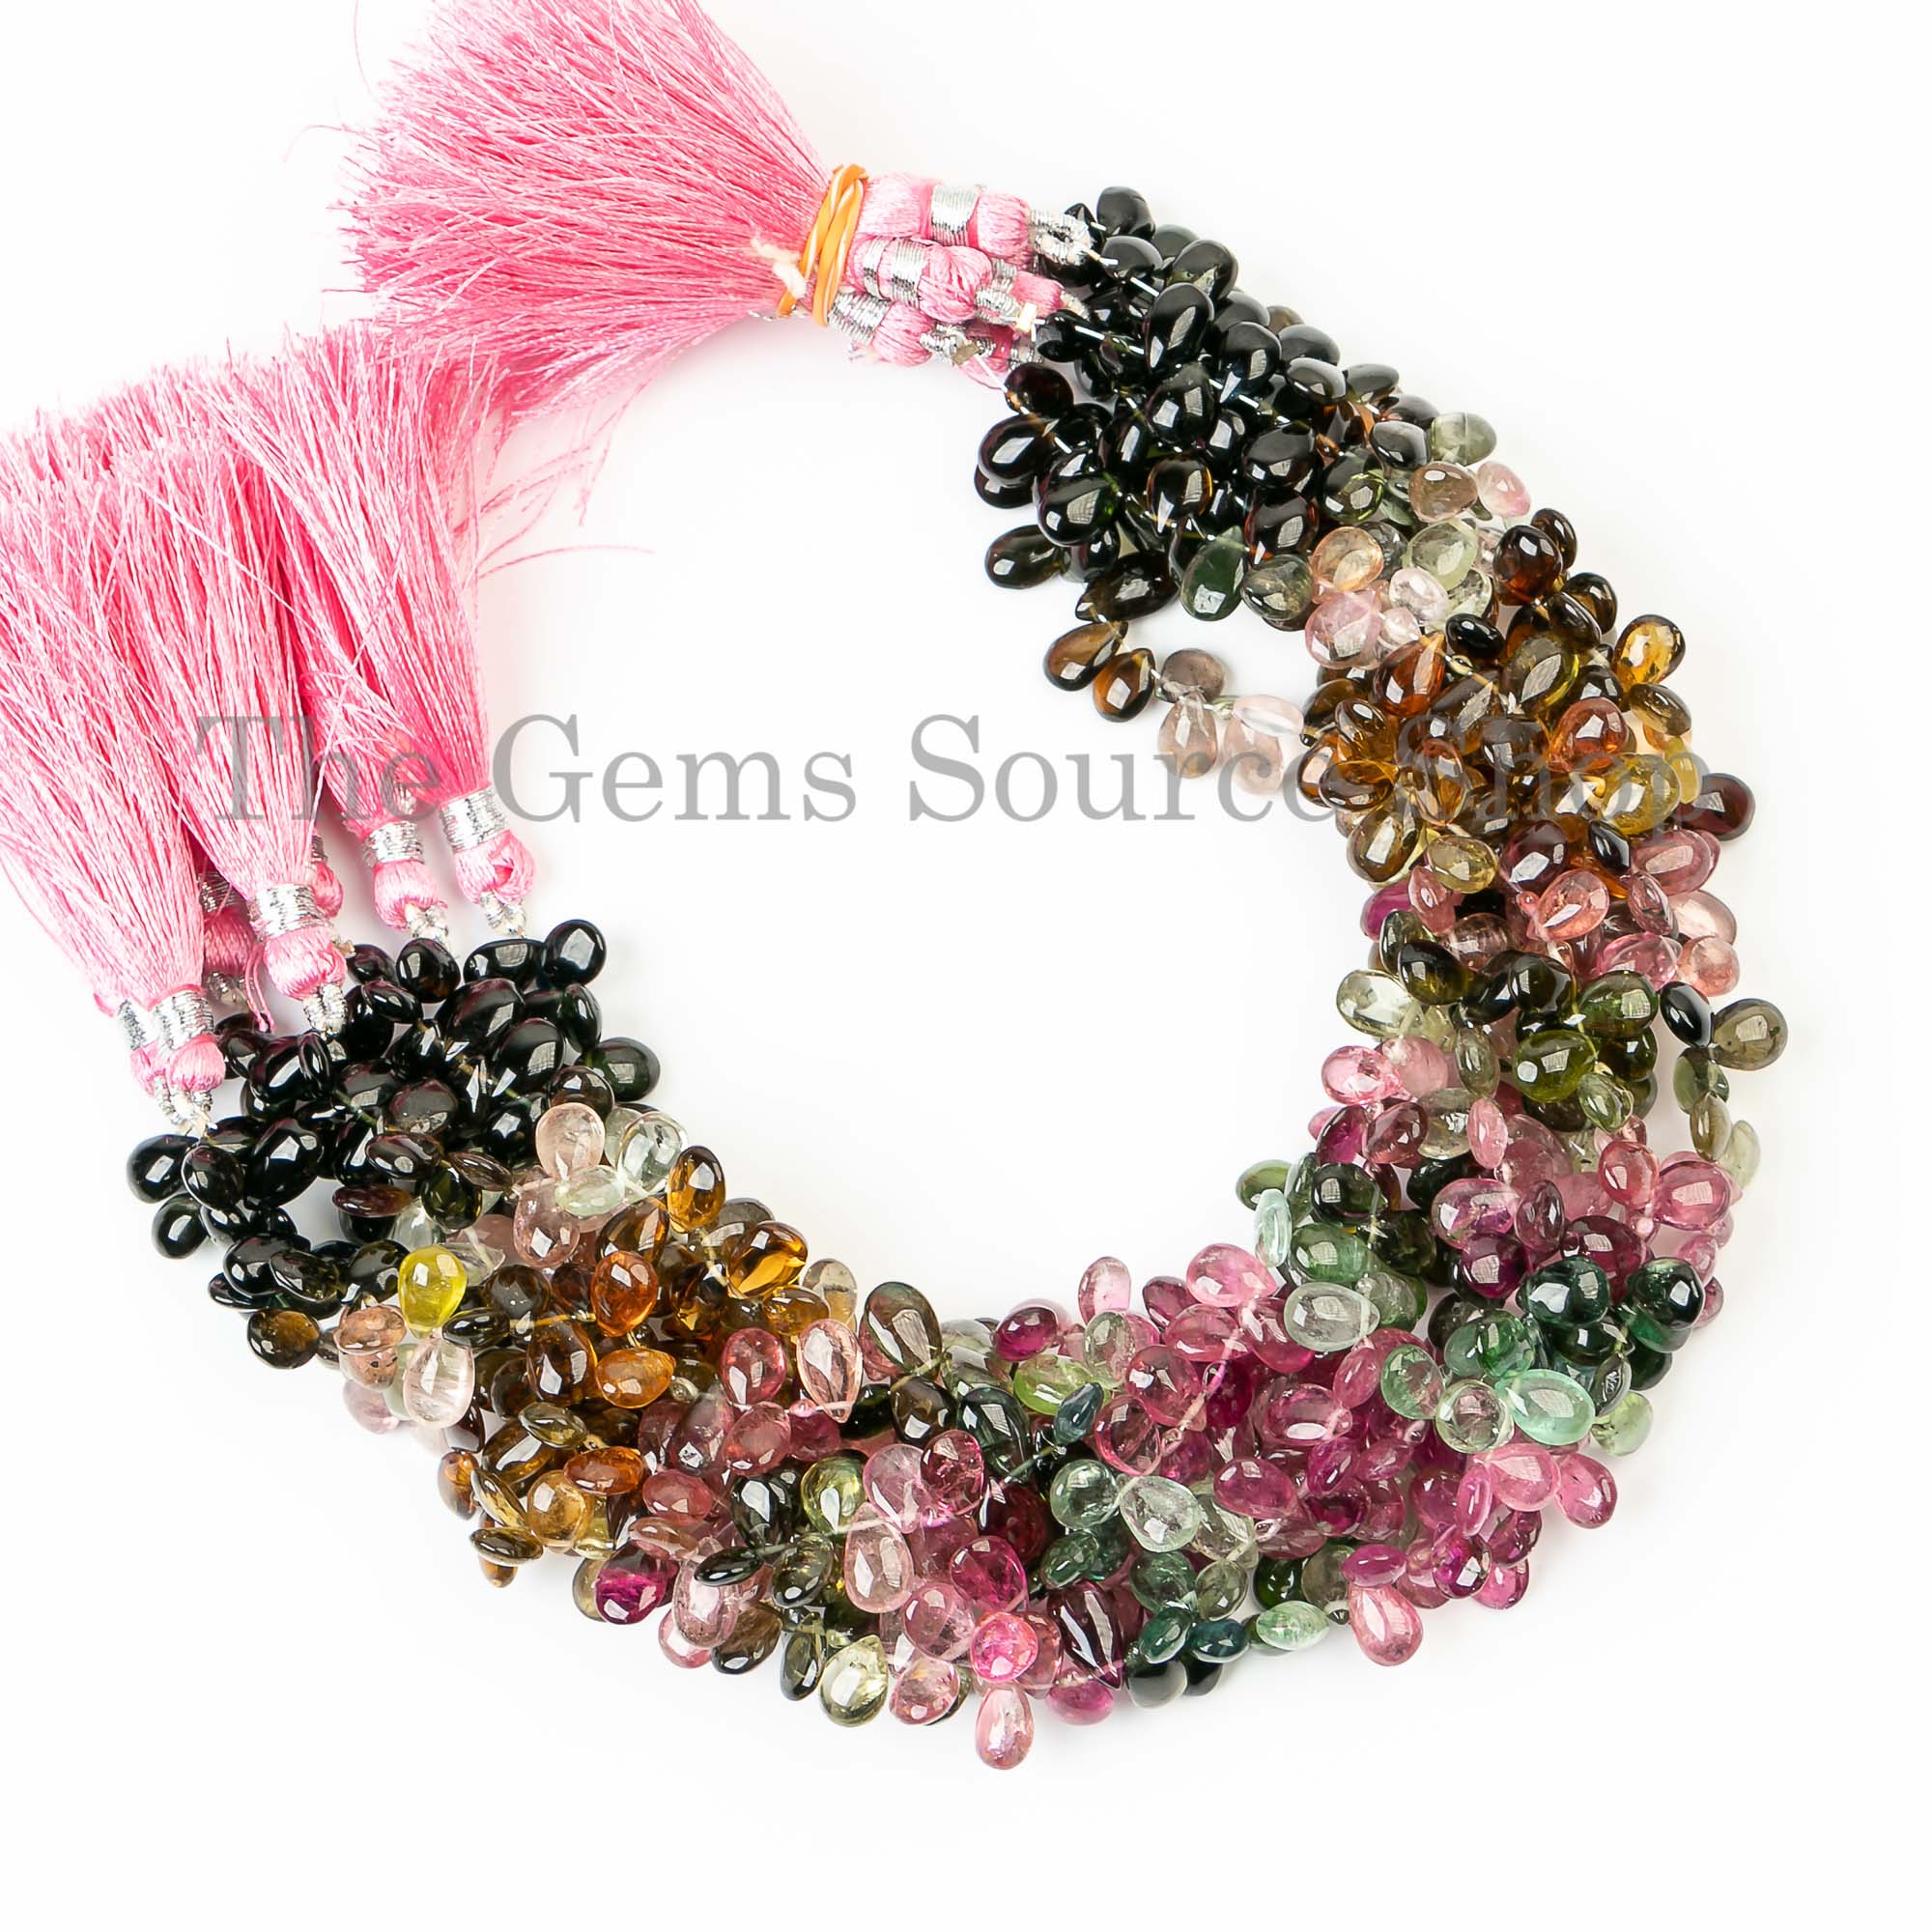 Multi Tourmaline Beads, Tourmaline Smooth Pear Beads, Plain Tourmaline Pear Beads, Wholesale Beads